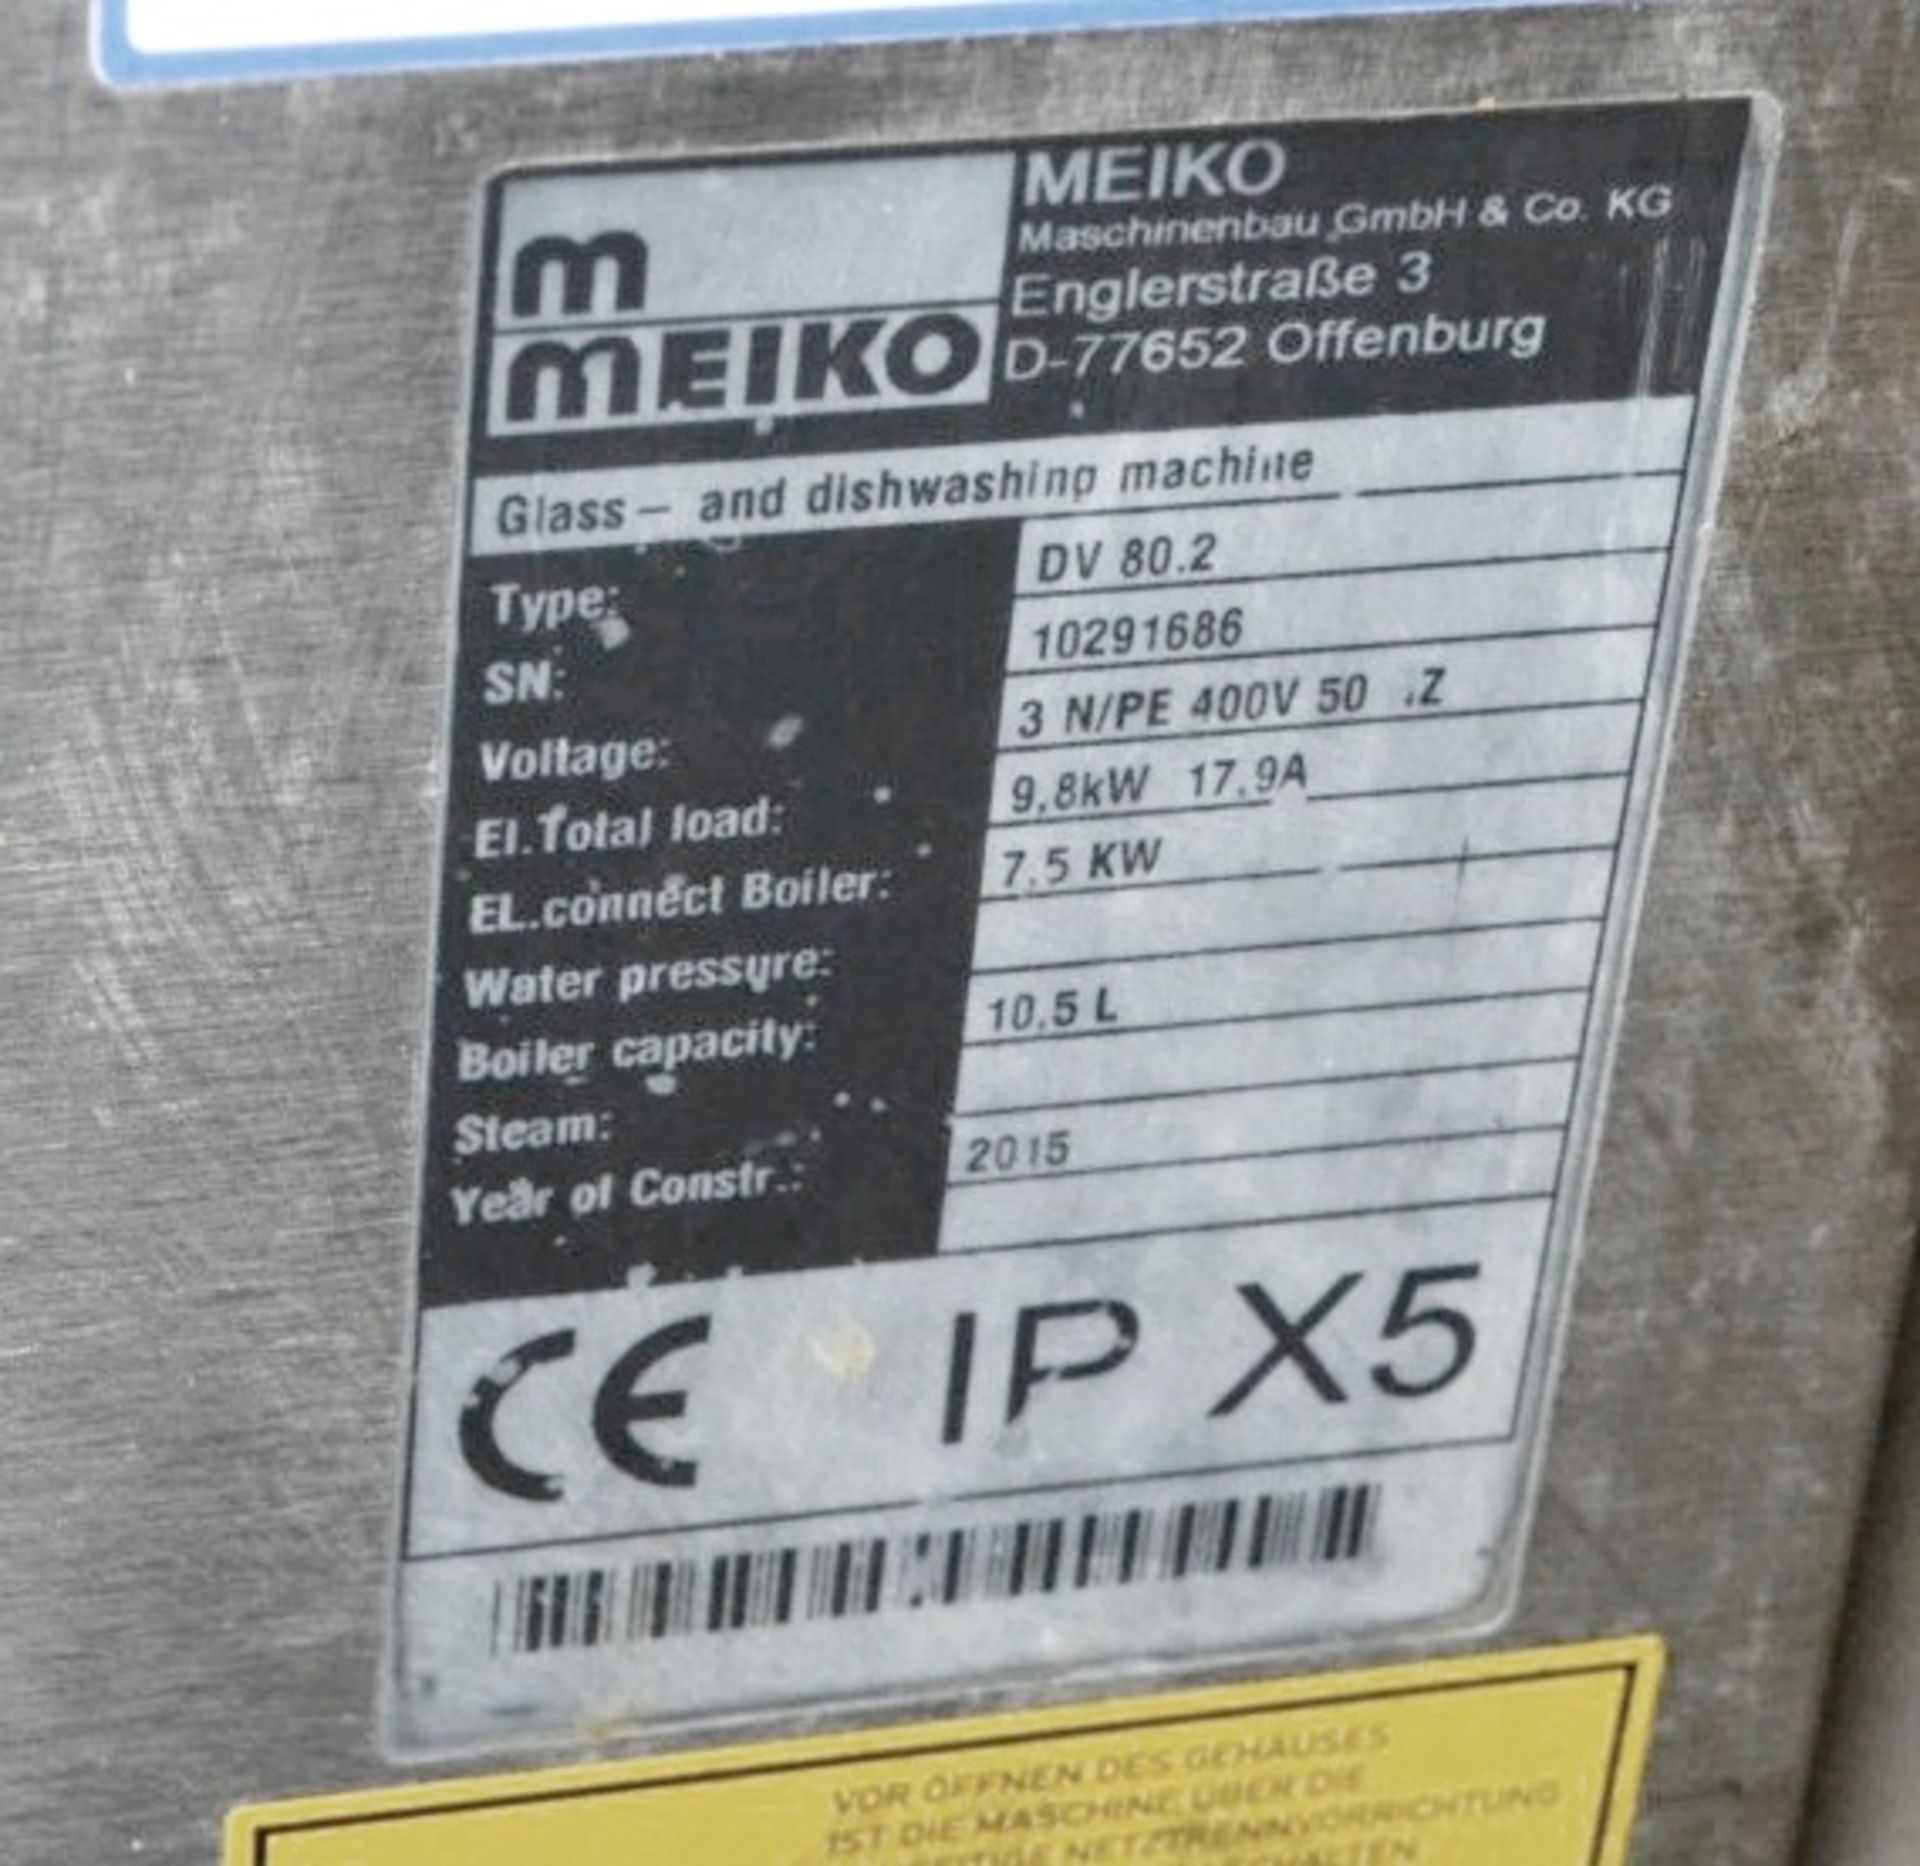 1 x MEIKO DV80.2 Pass Through Dishwasher - City Centre Restaurant Closure - CL353 - Ref: M433 - Image 3 of 14